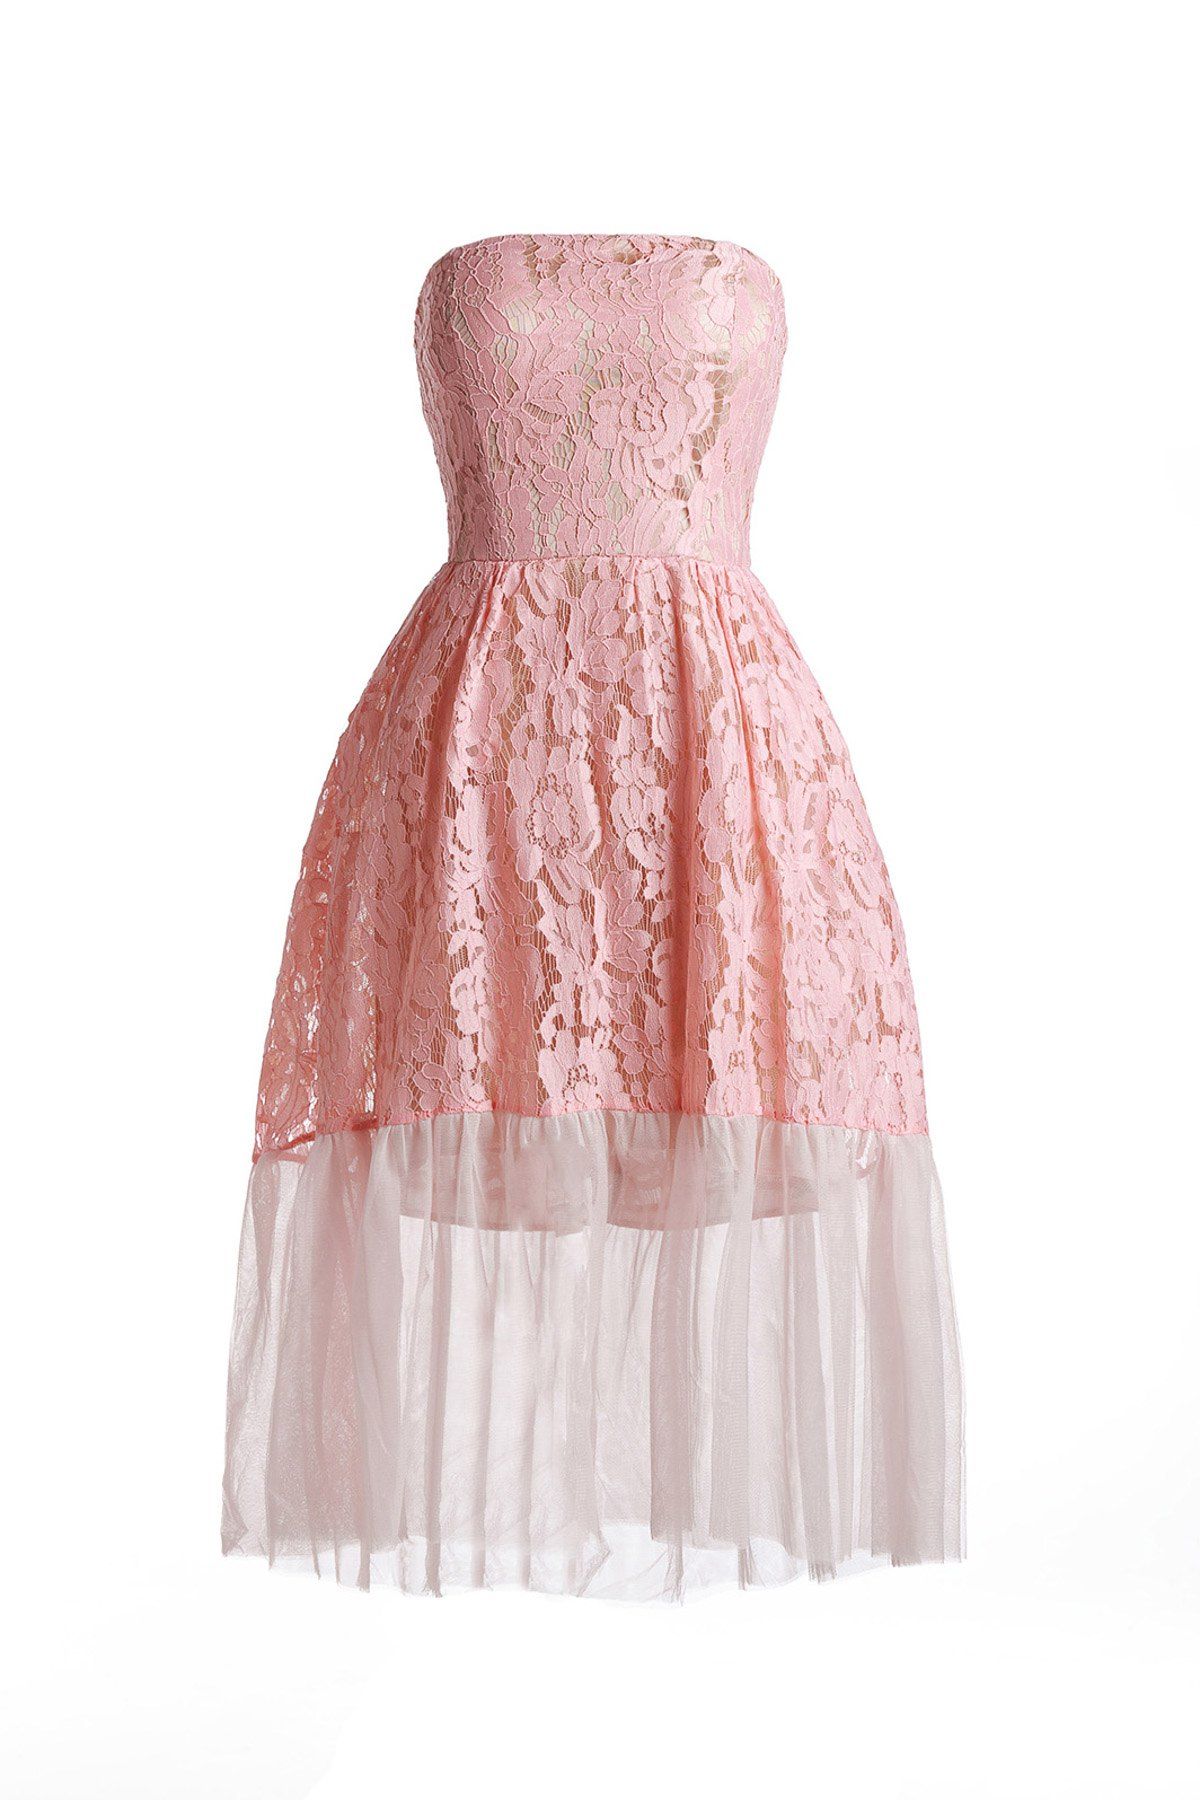 Buy Strapless Midi Lace Sleeveless Homecoming Prom Dress  